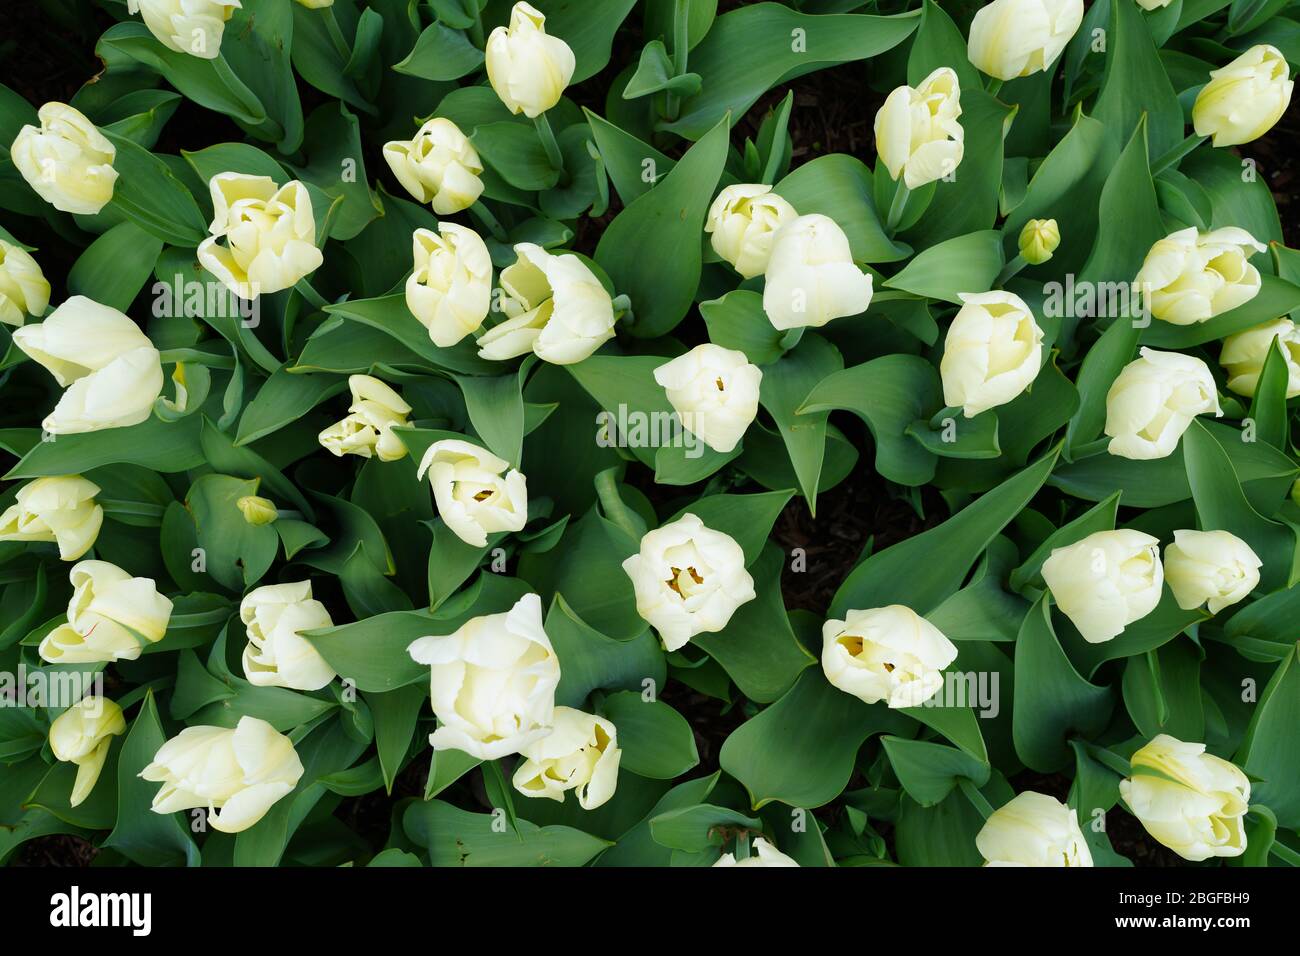 White tulip flowers in the spring garden Stock Photo